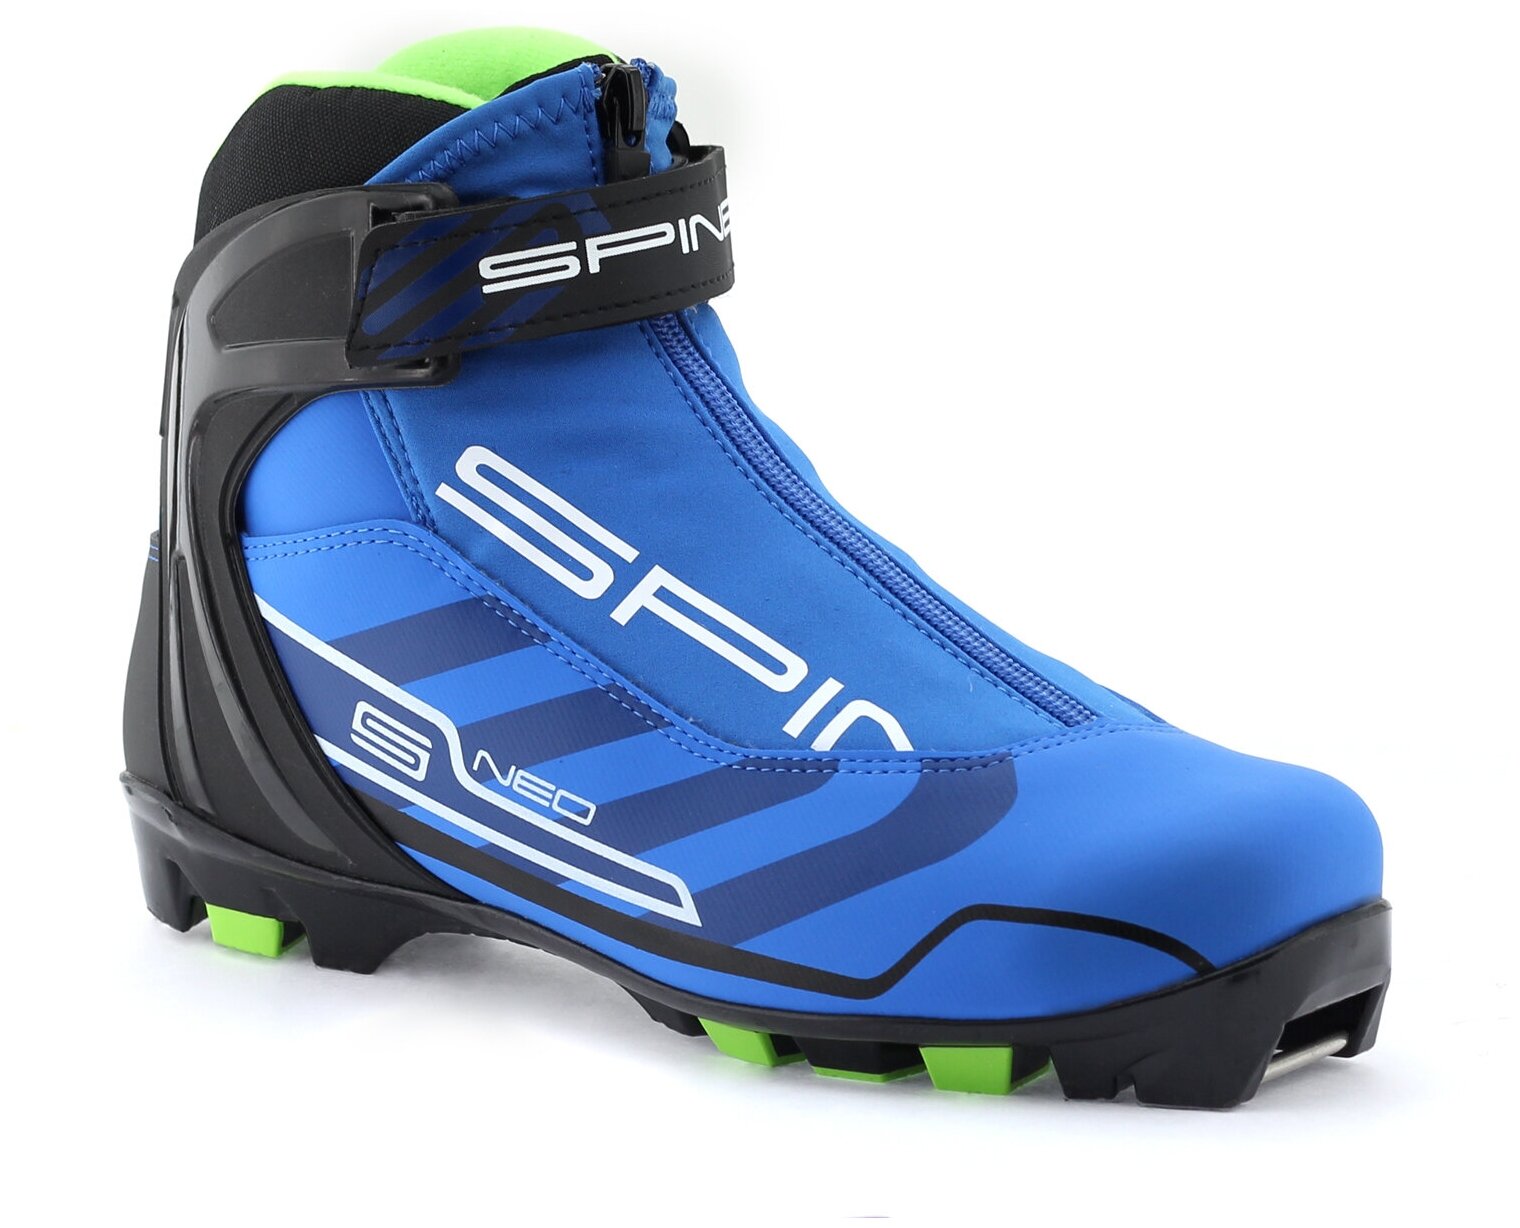 Ботинки лыжные SPINE Neo артикул 161 NNN, размер 39